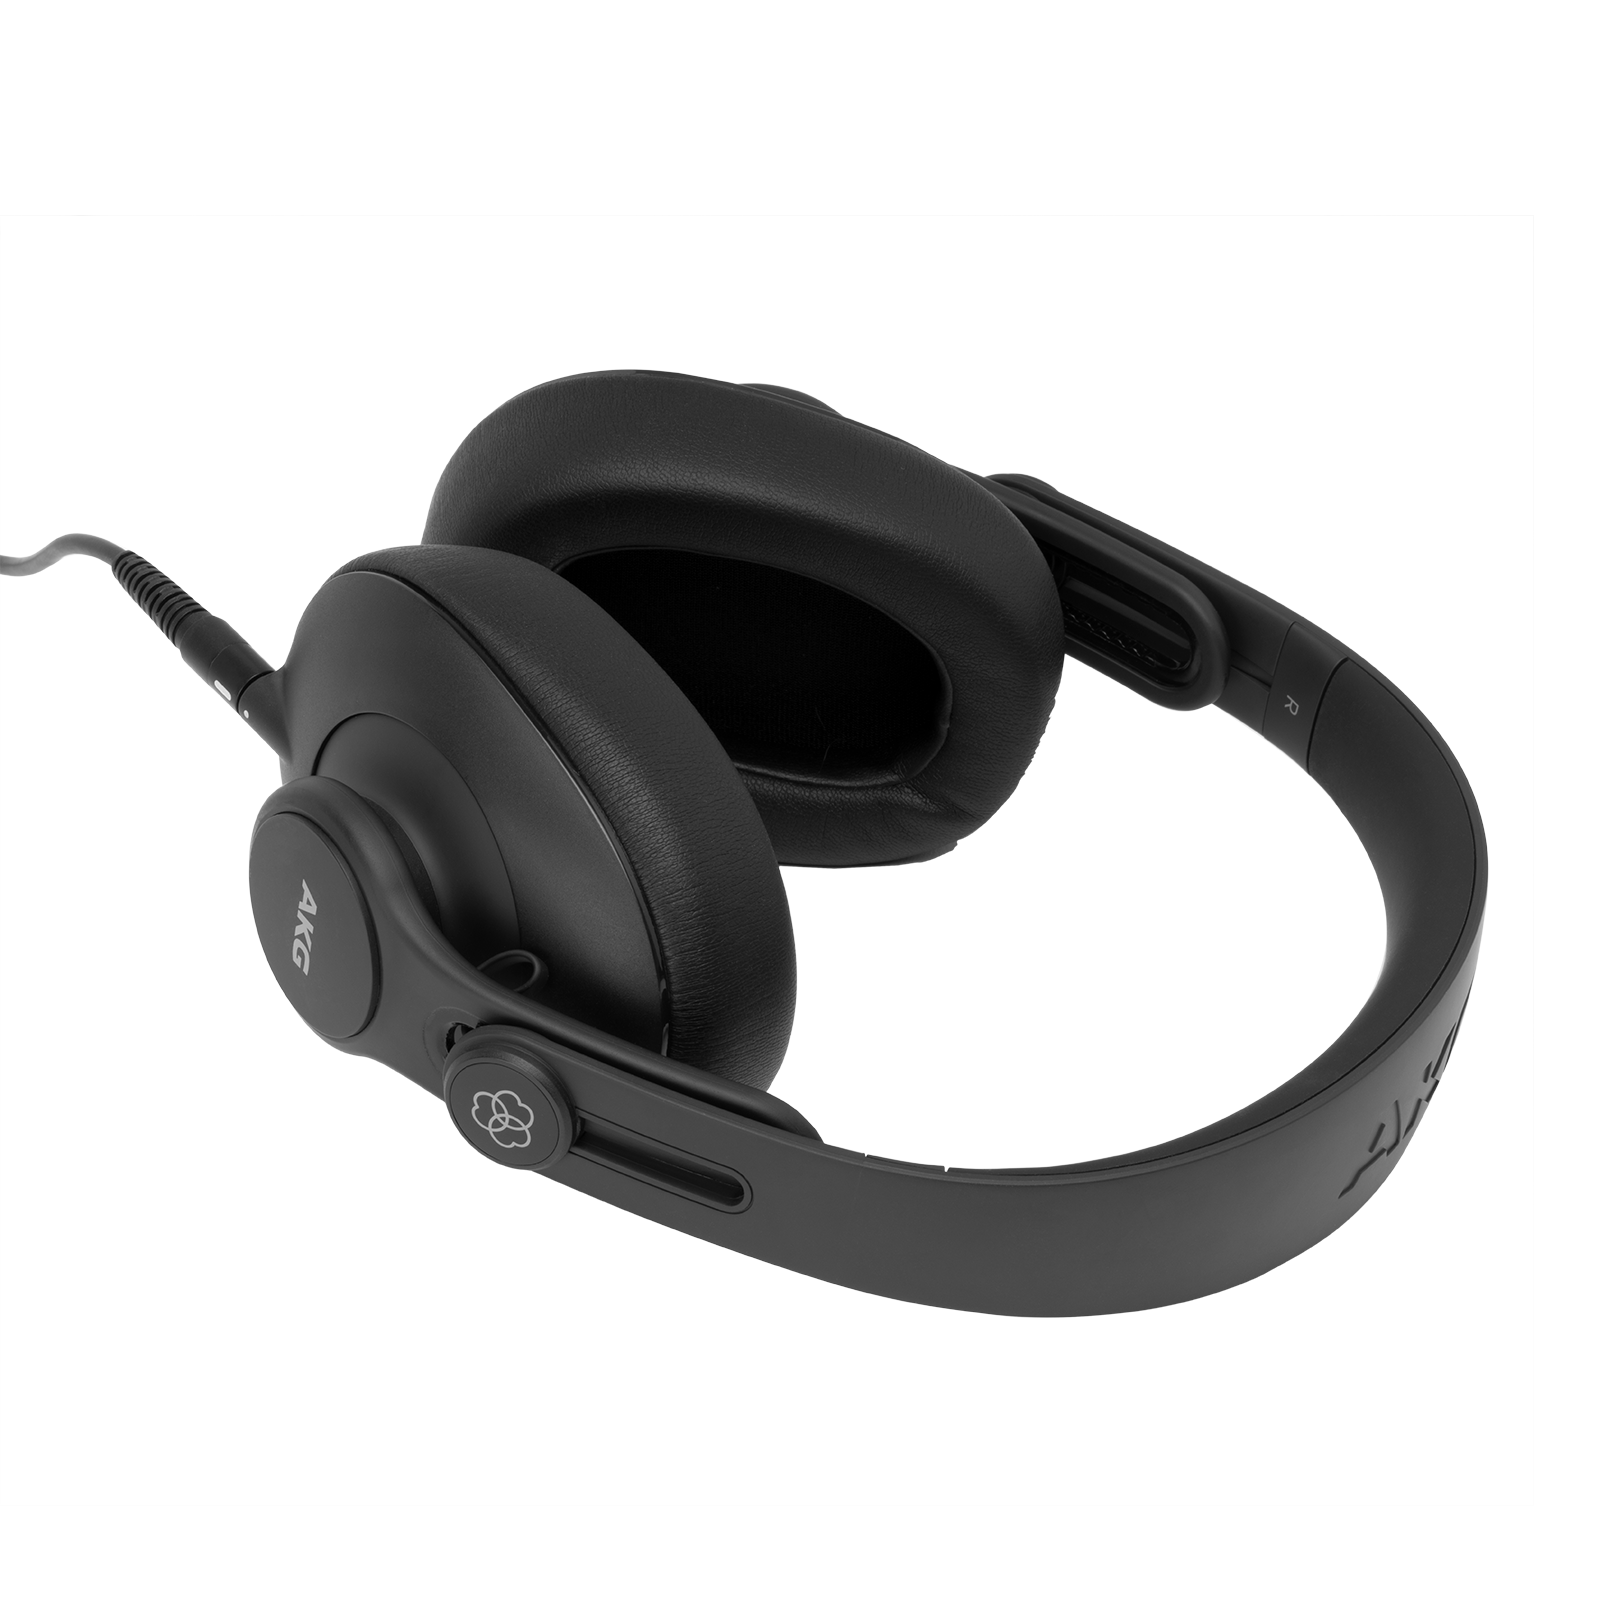 K361 - Black - Over-ear, closed-back, foldable studio headphones  - Detailshot 3